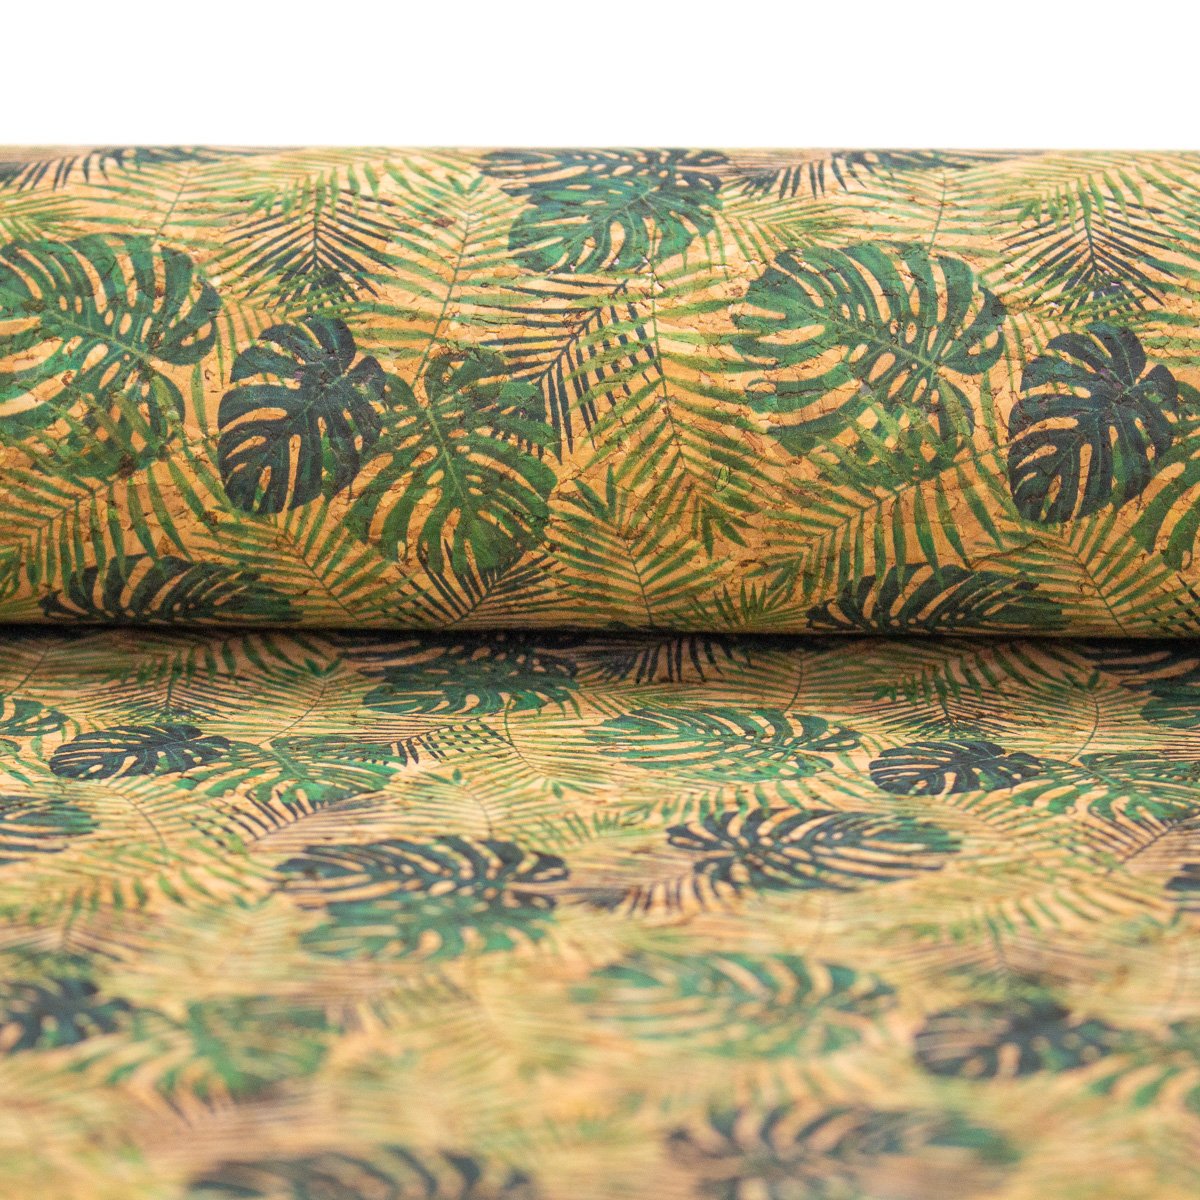 Green leaves  pattern Cork fabric COF-373